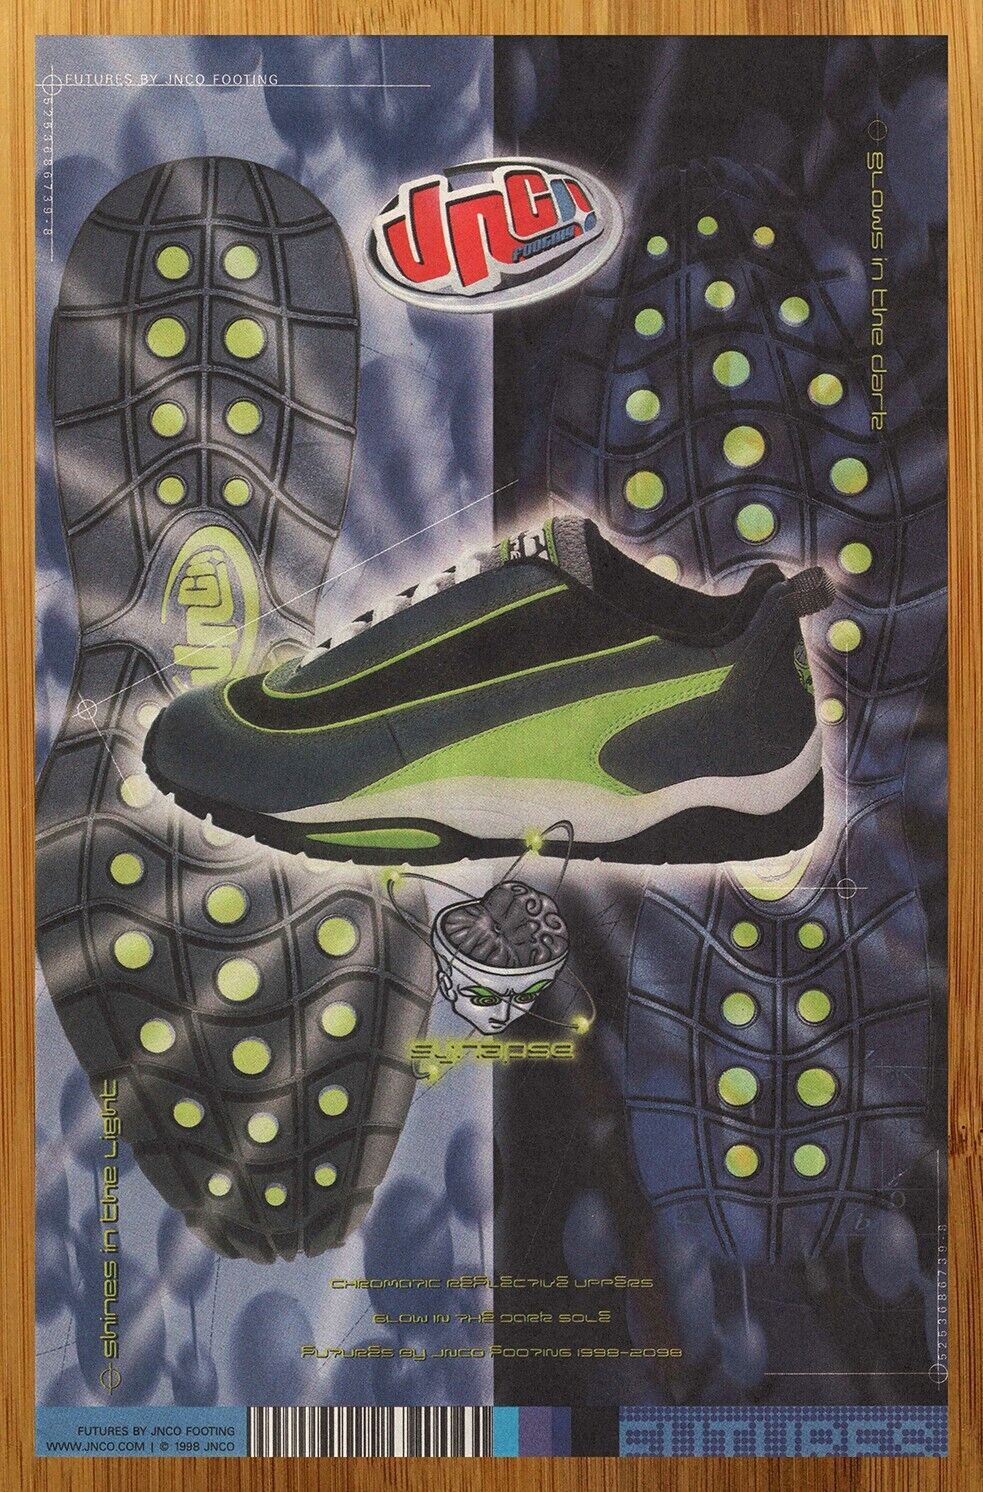 1998 JNCO Synapse Sneakers Vintage Print Ad/Poster Skateboarding Shoe Pop Art